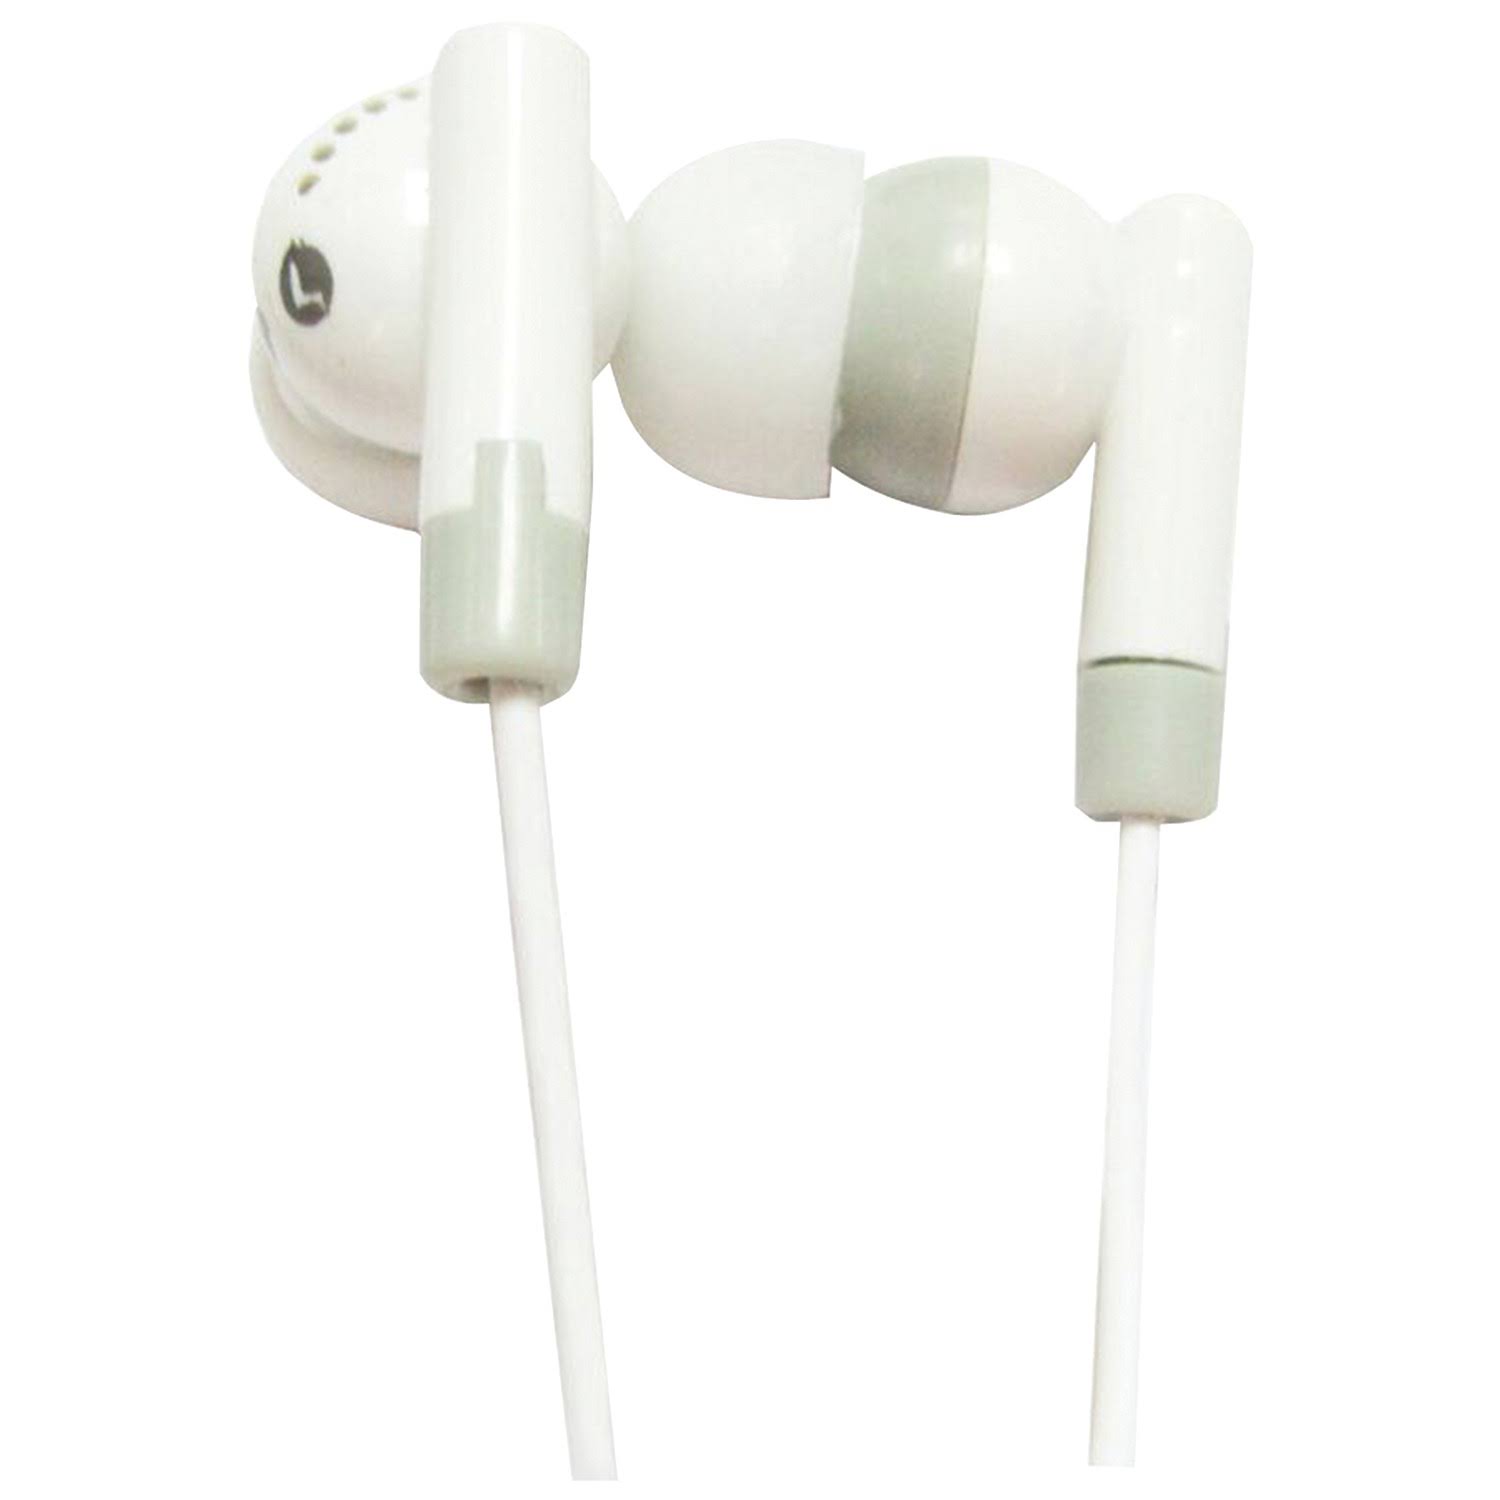 Iq Sound Digital Stereo Earphones - White